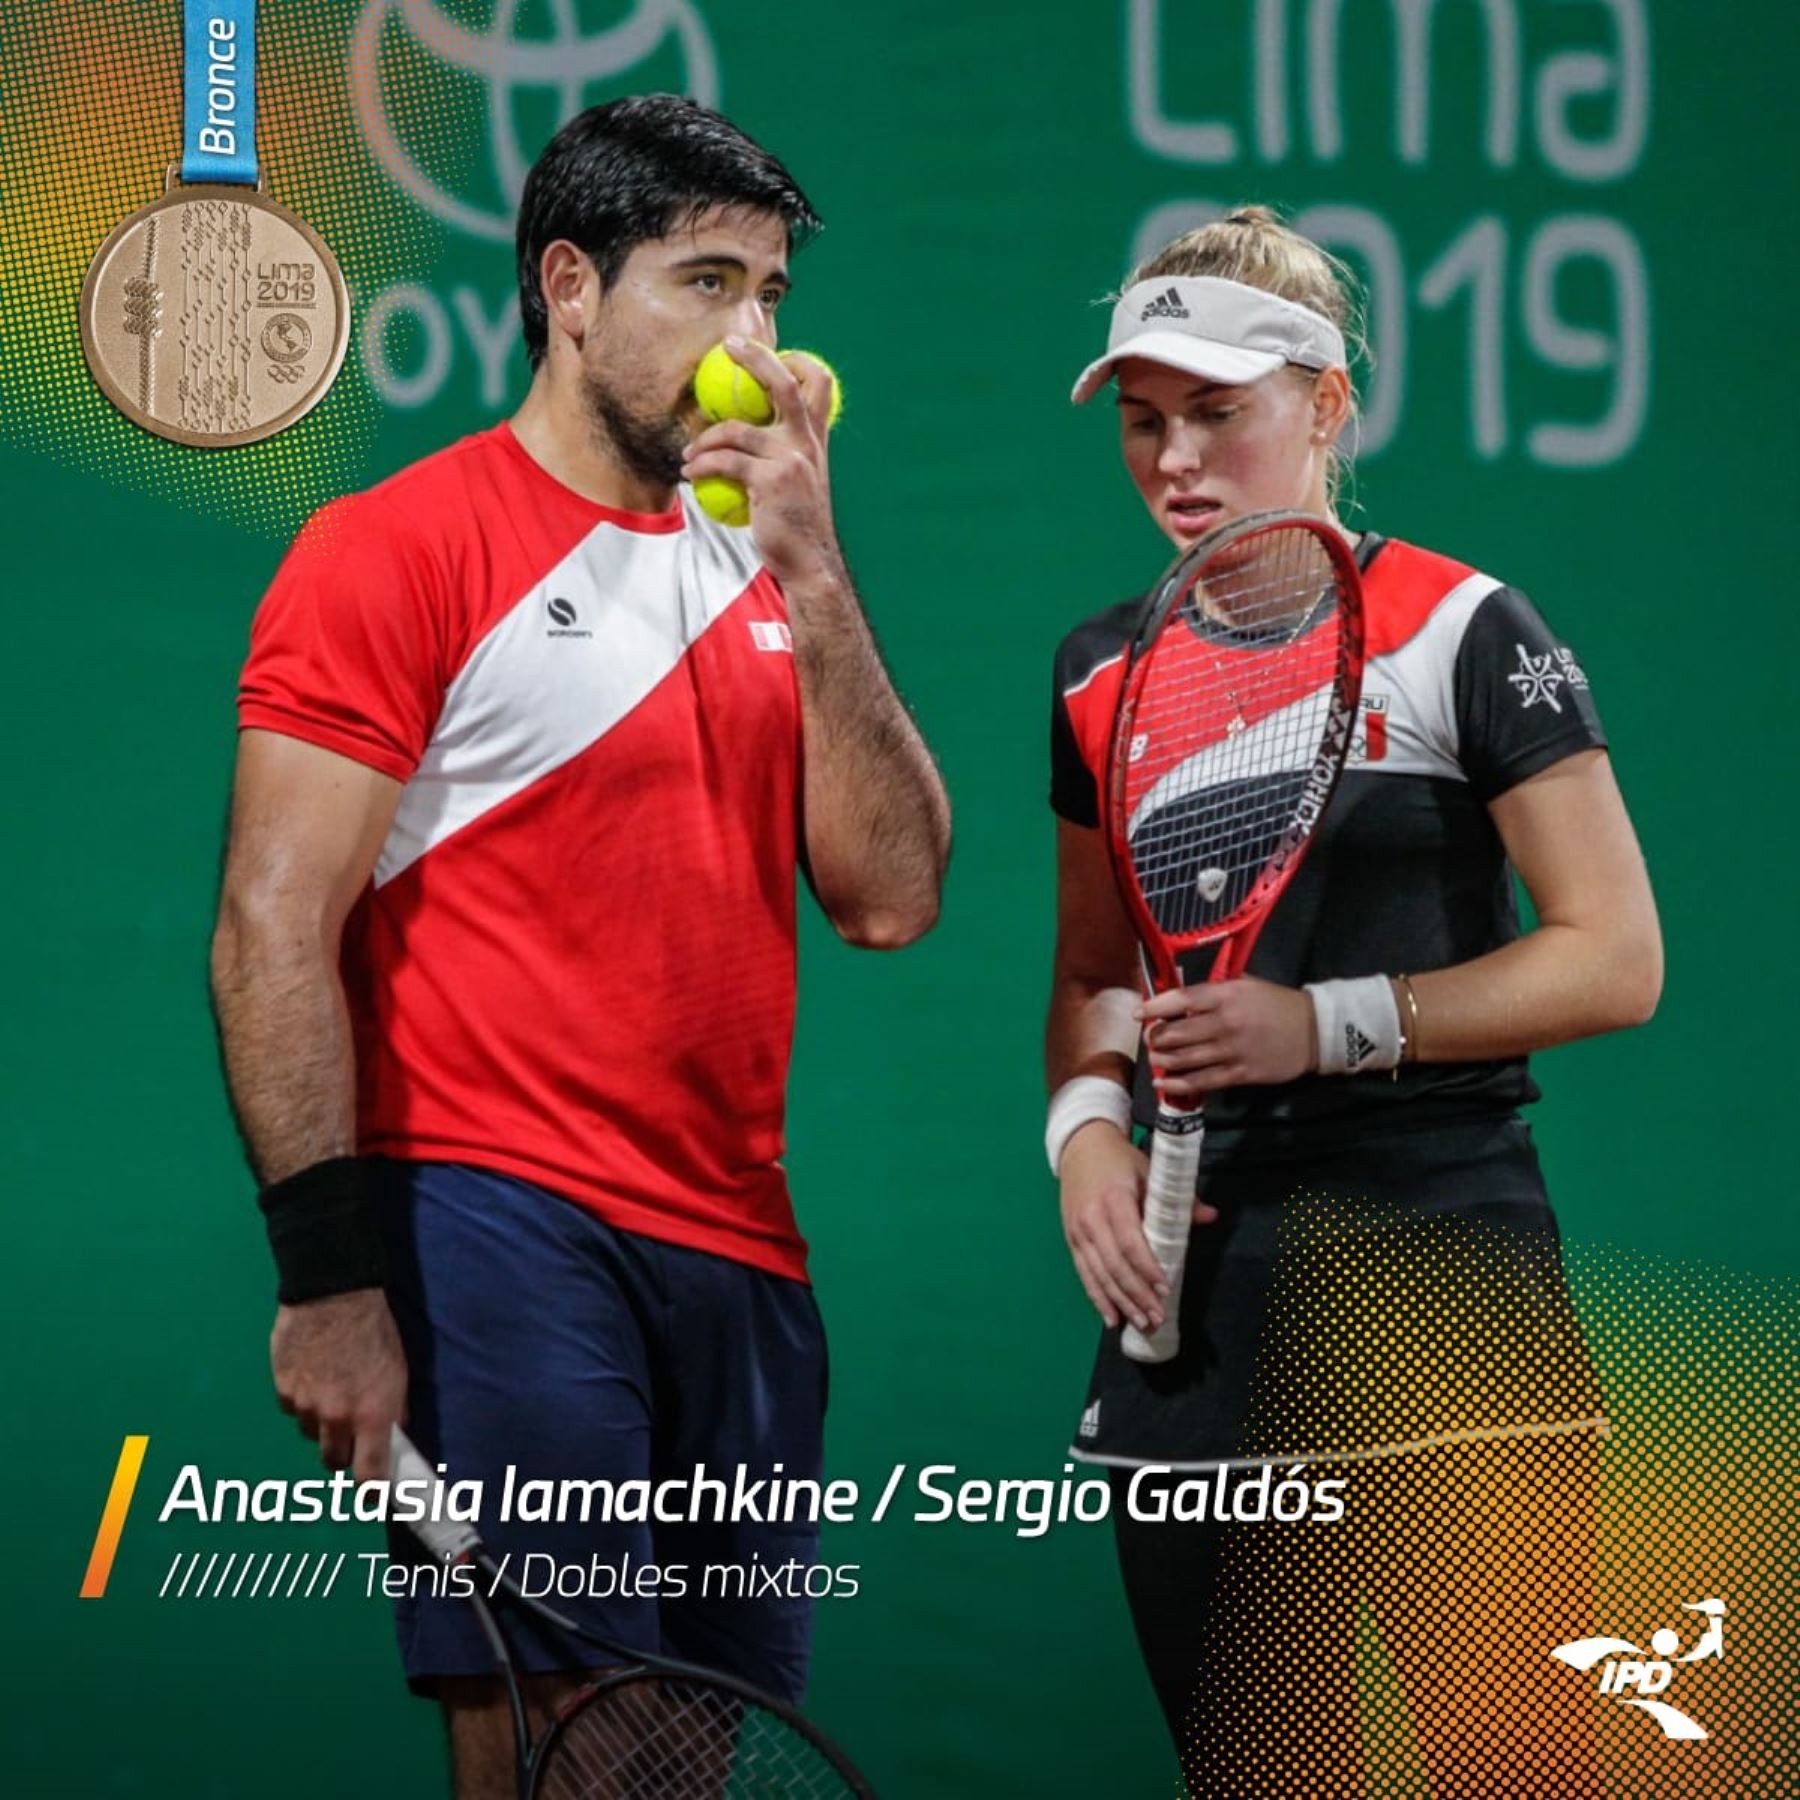 Tenistas Sergio Galdosy y Anastasia Iamachkine. Foto: IPD.